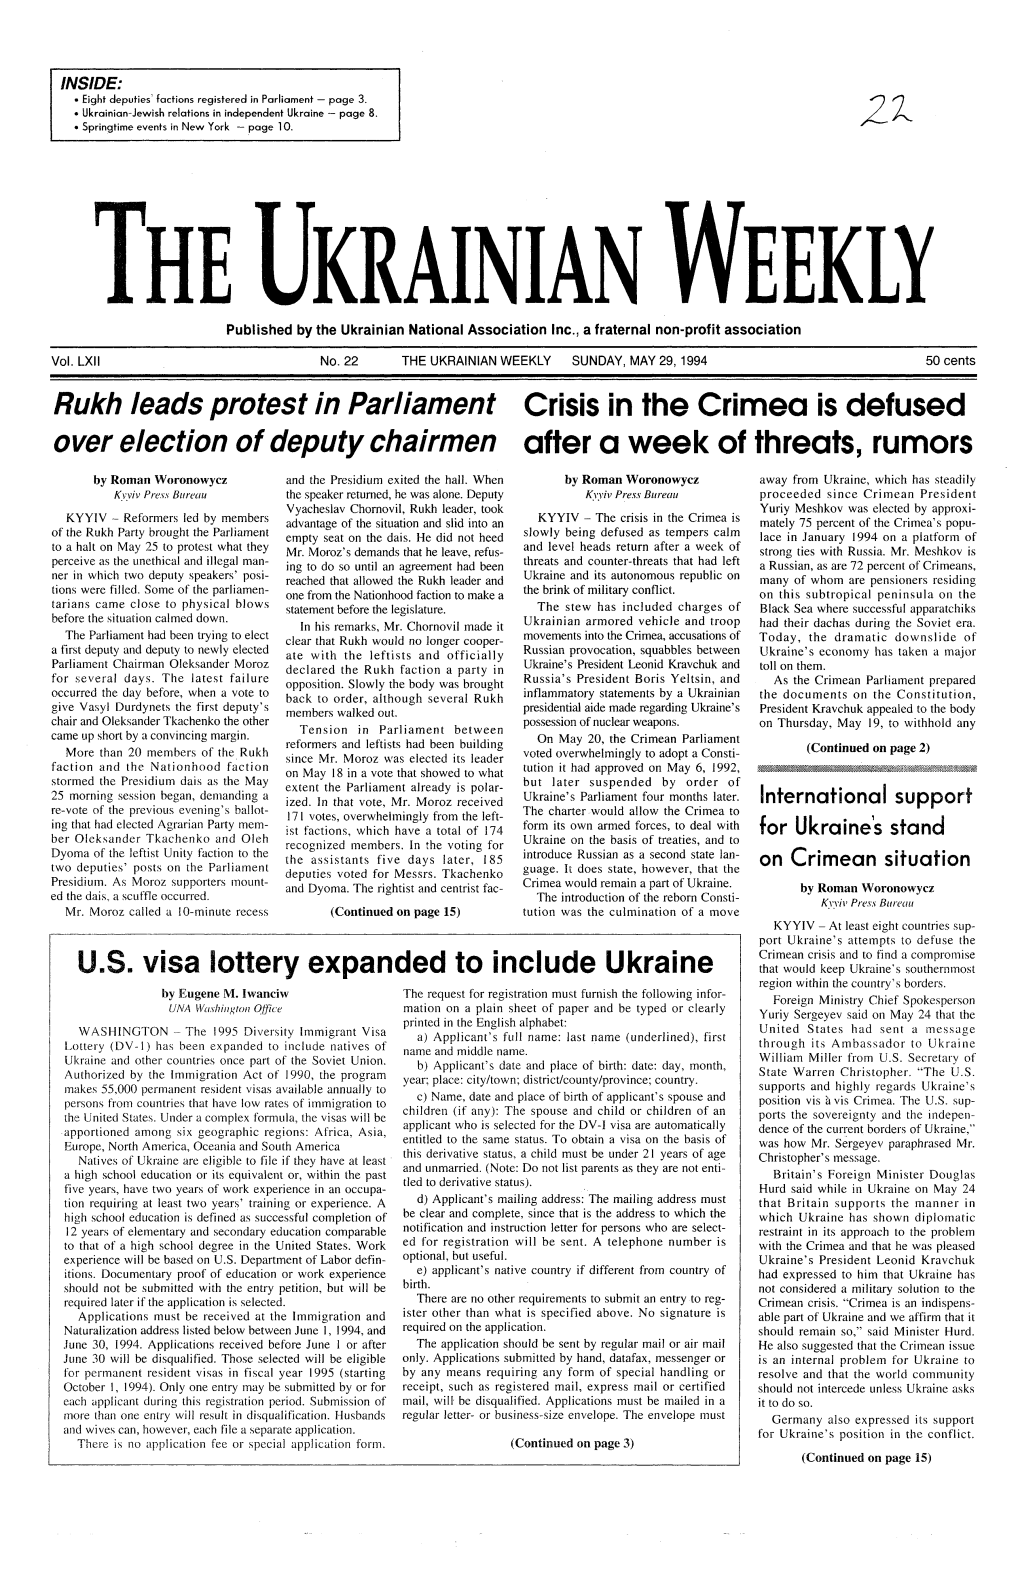 The Ukrainian Weekly 1994, No.22